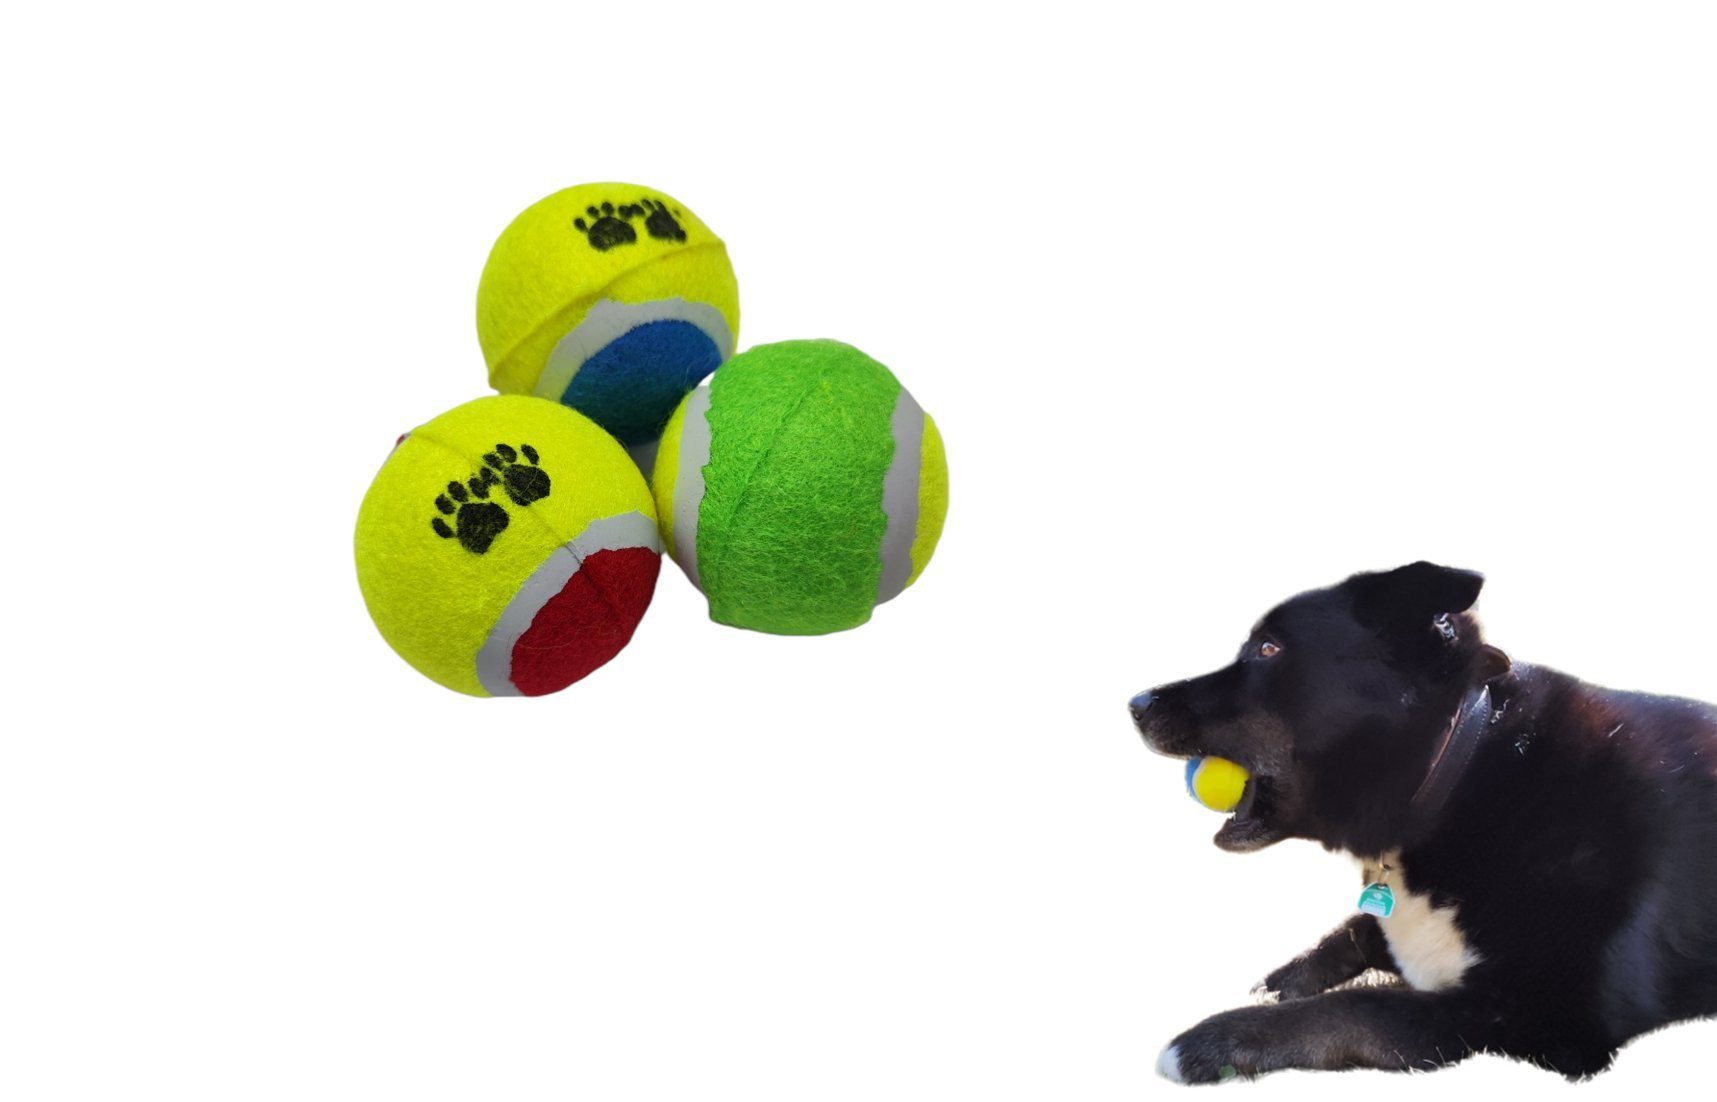 HMH-Shop Tierball Hundebälle bunt Hundespielzeug Haustier Katze Ball Spielen Hund Tennisball Dog Toys Hundeball Spaß Agility Training Ausdauer auspowern Tennisbälle Ø ~6,5cm Helle Farben gut auffindbar, Helle Farben, gut auffindbar 6 Bälle